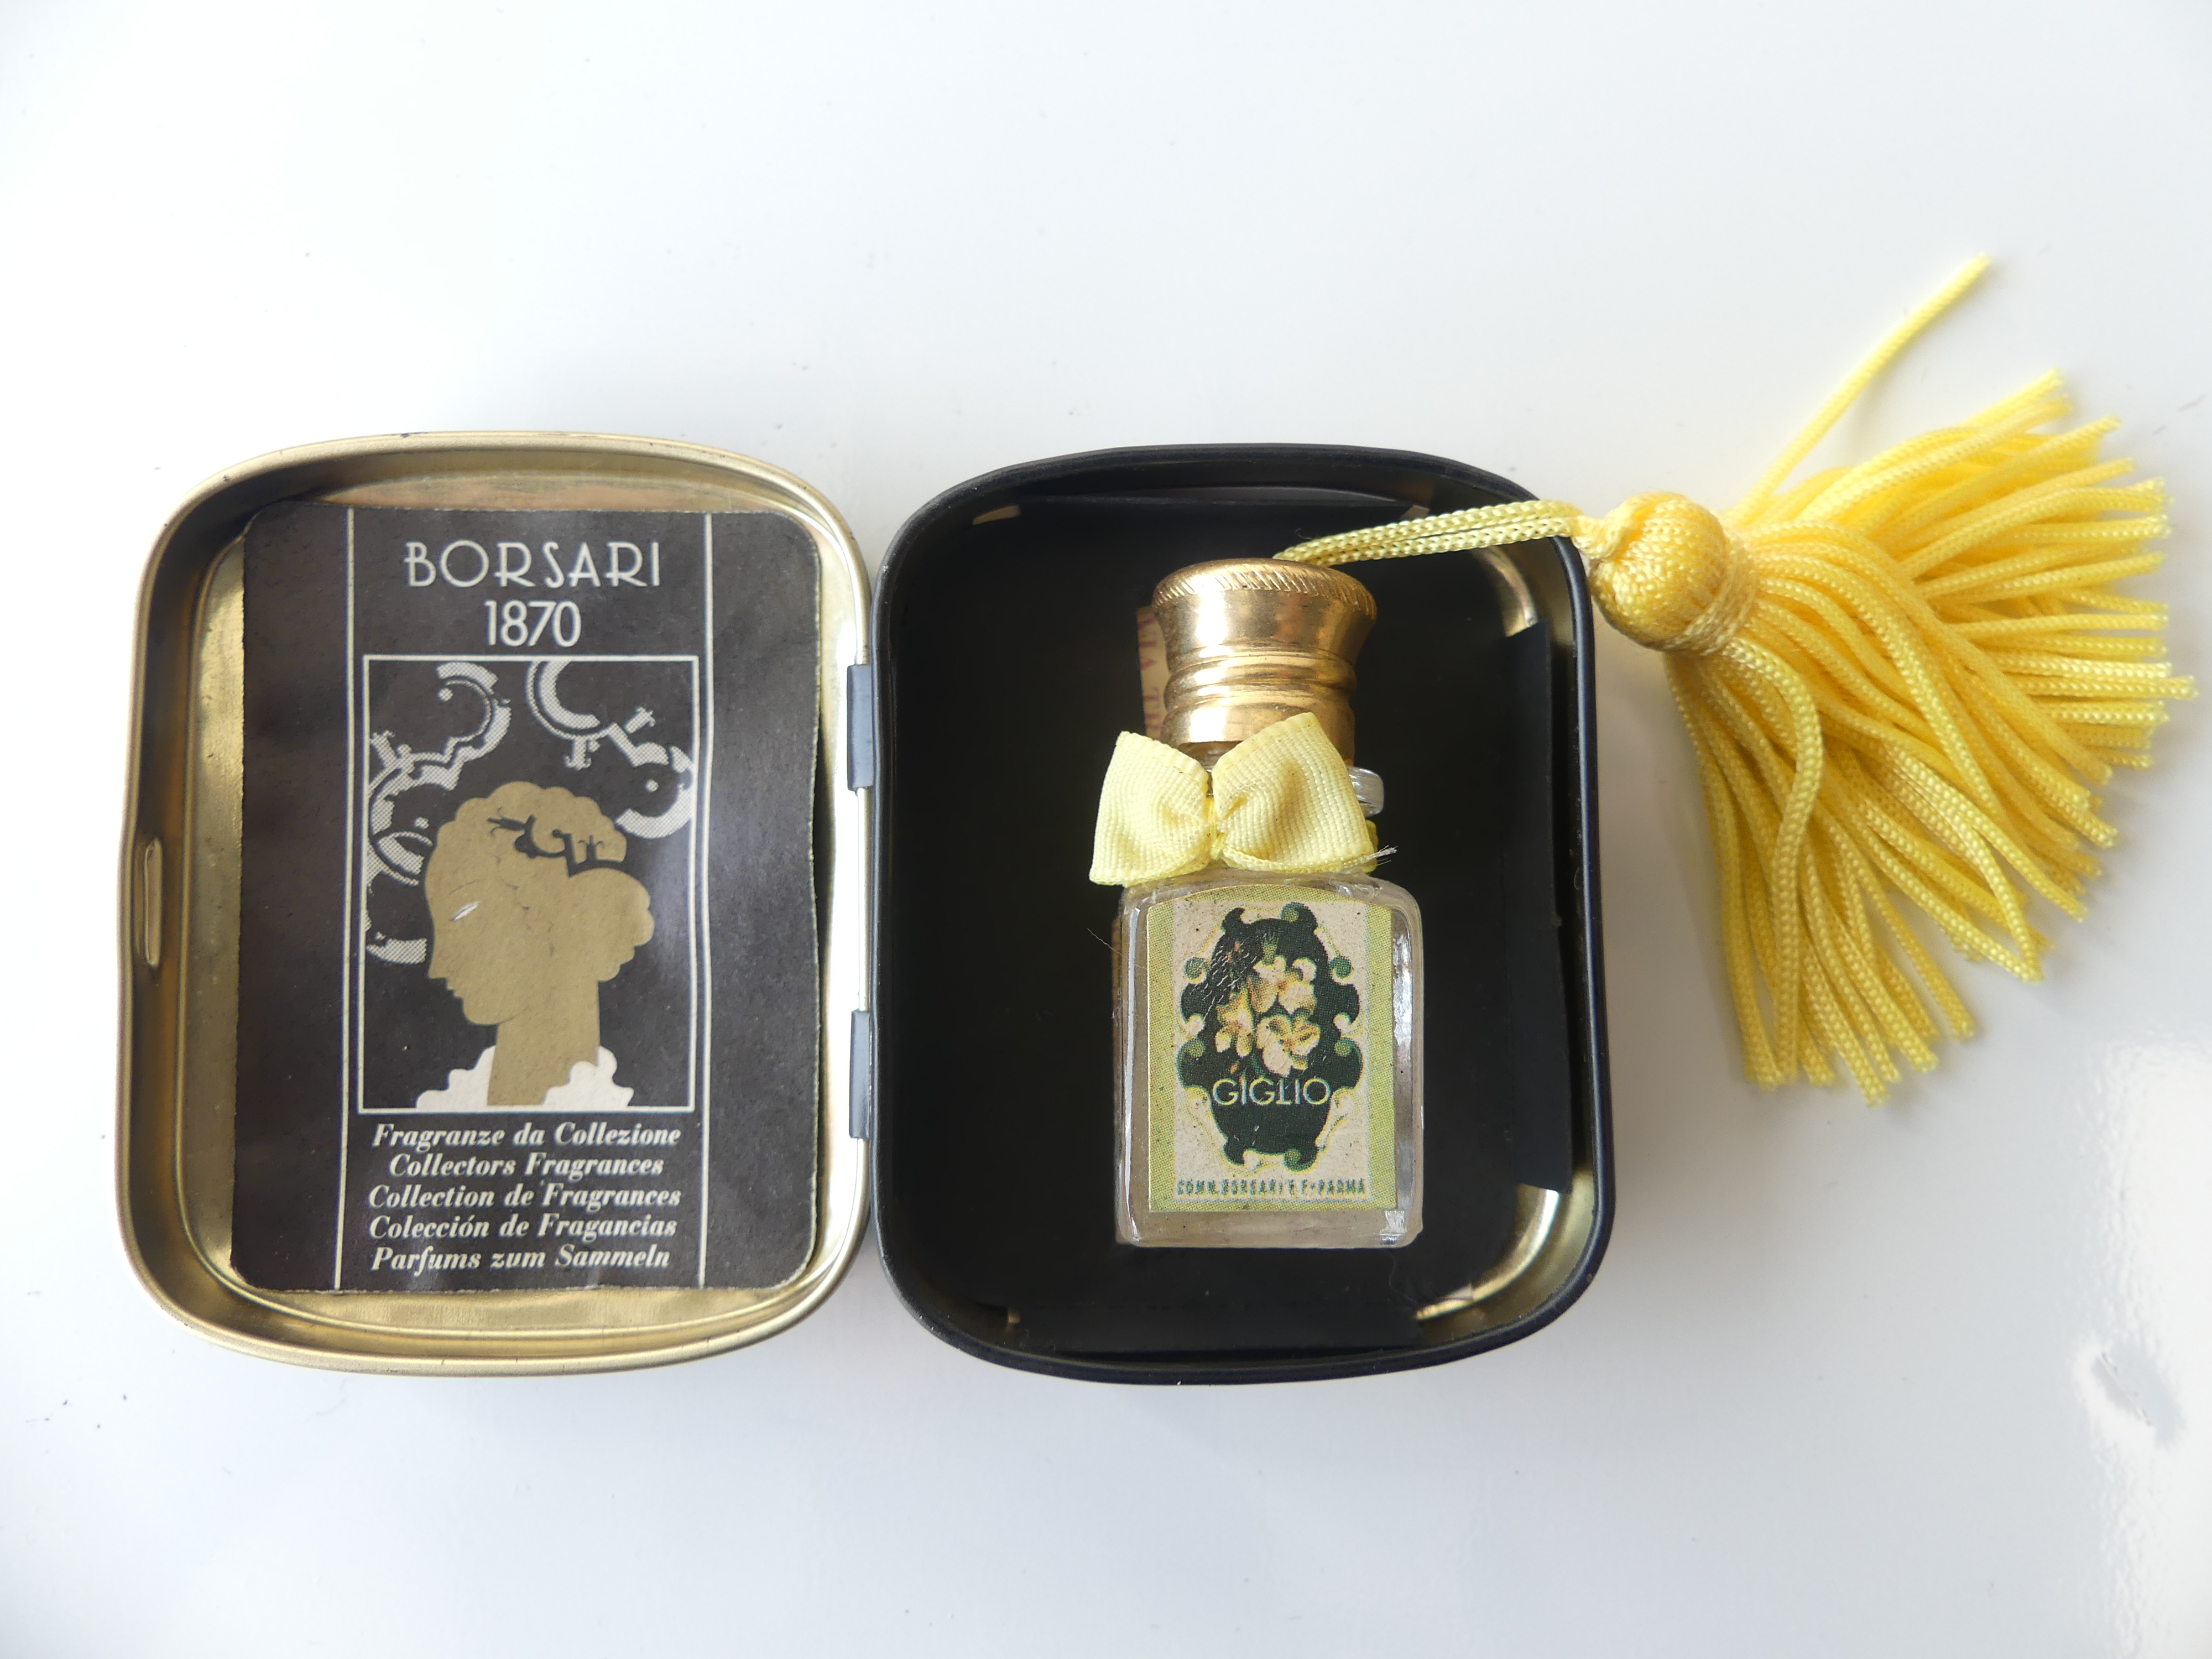 Borsari 1870 miniatuur in blik, Giglio met gele strik    